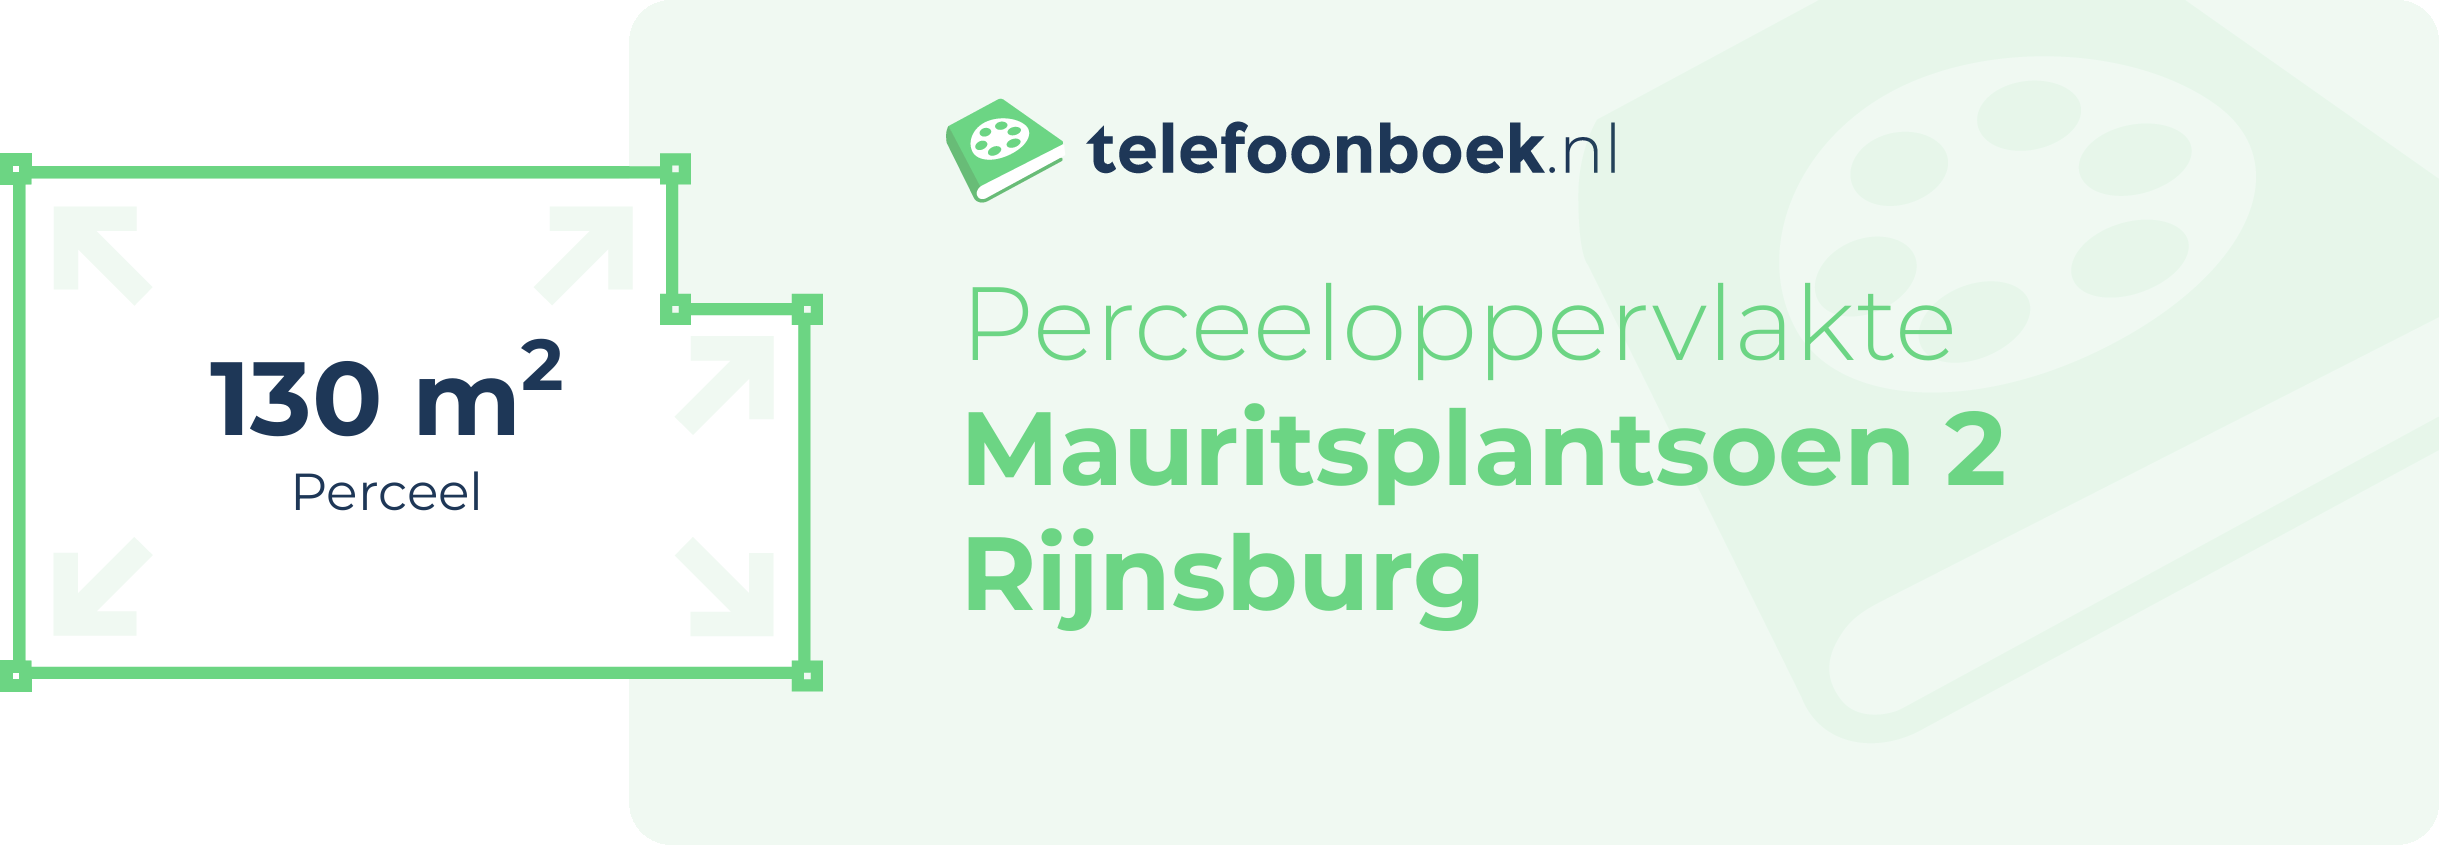 Perceeloppervlakte Mauritsplantsoen 2 Rijnsburg